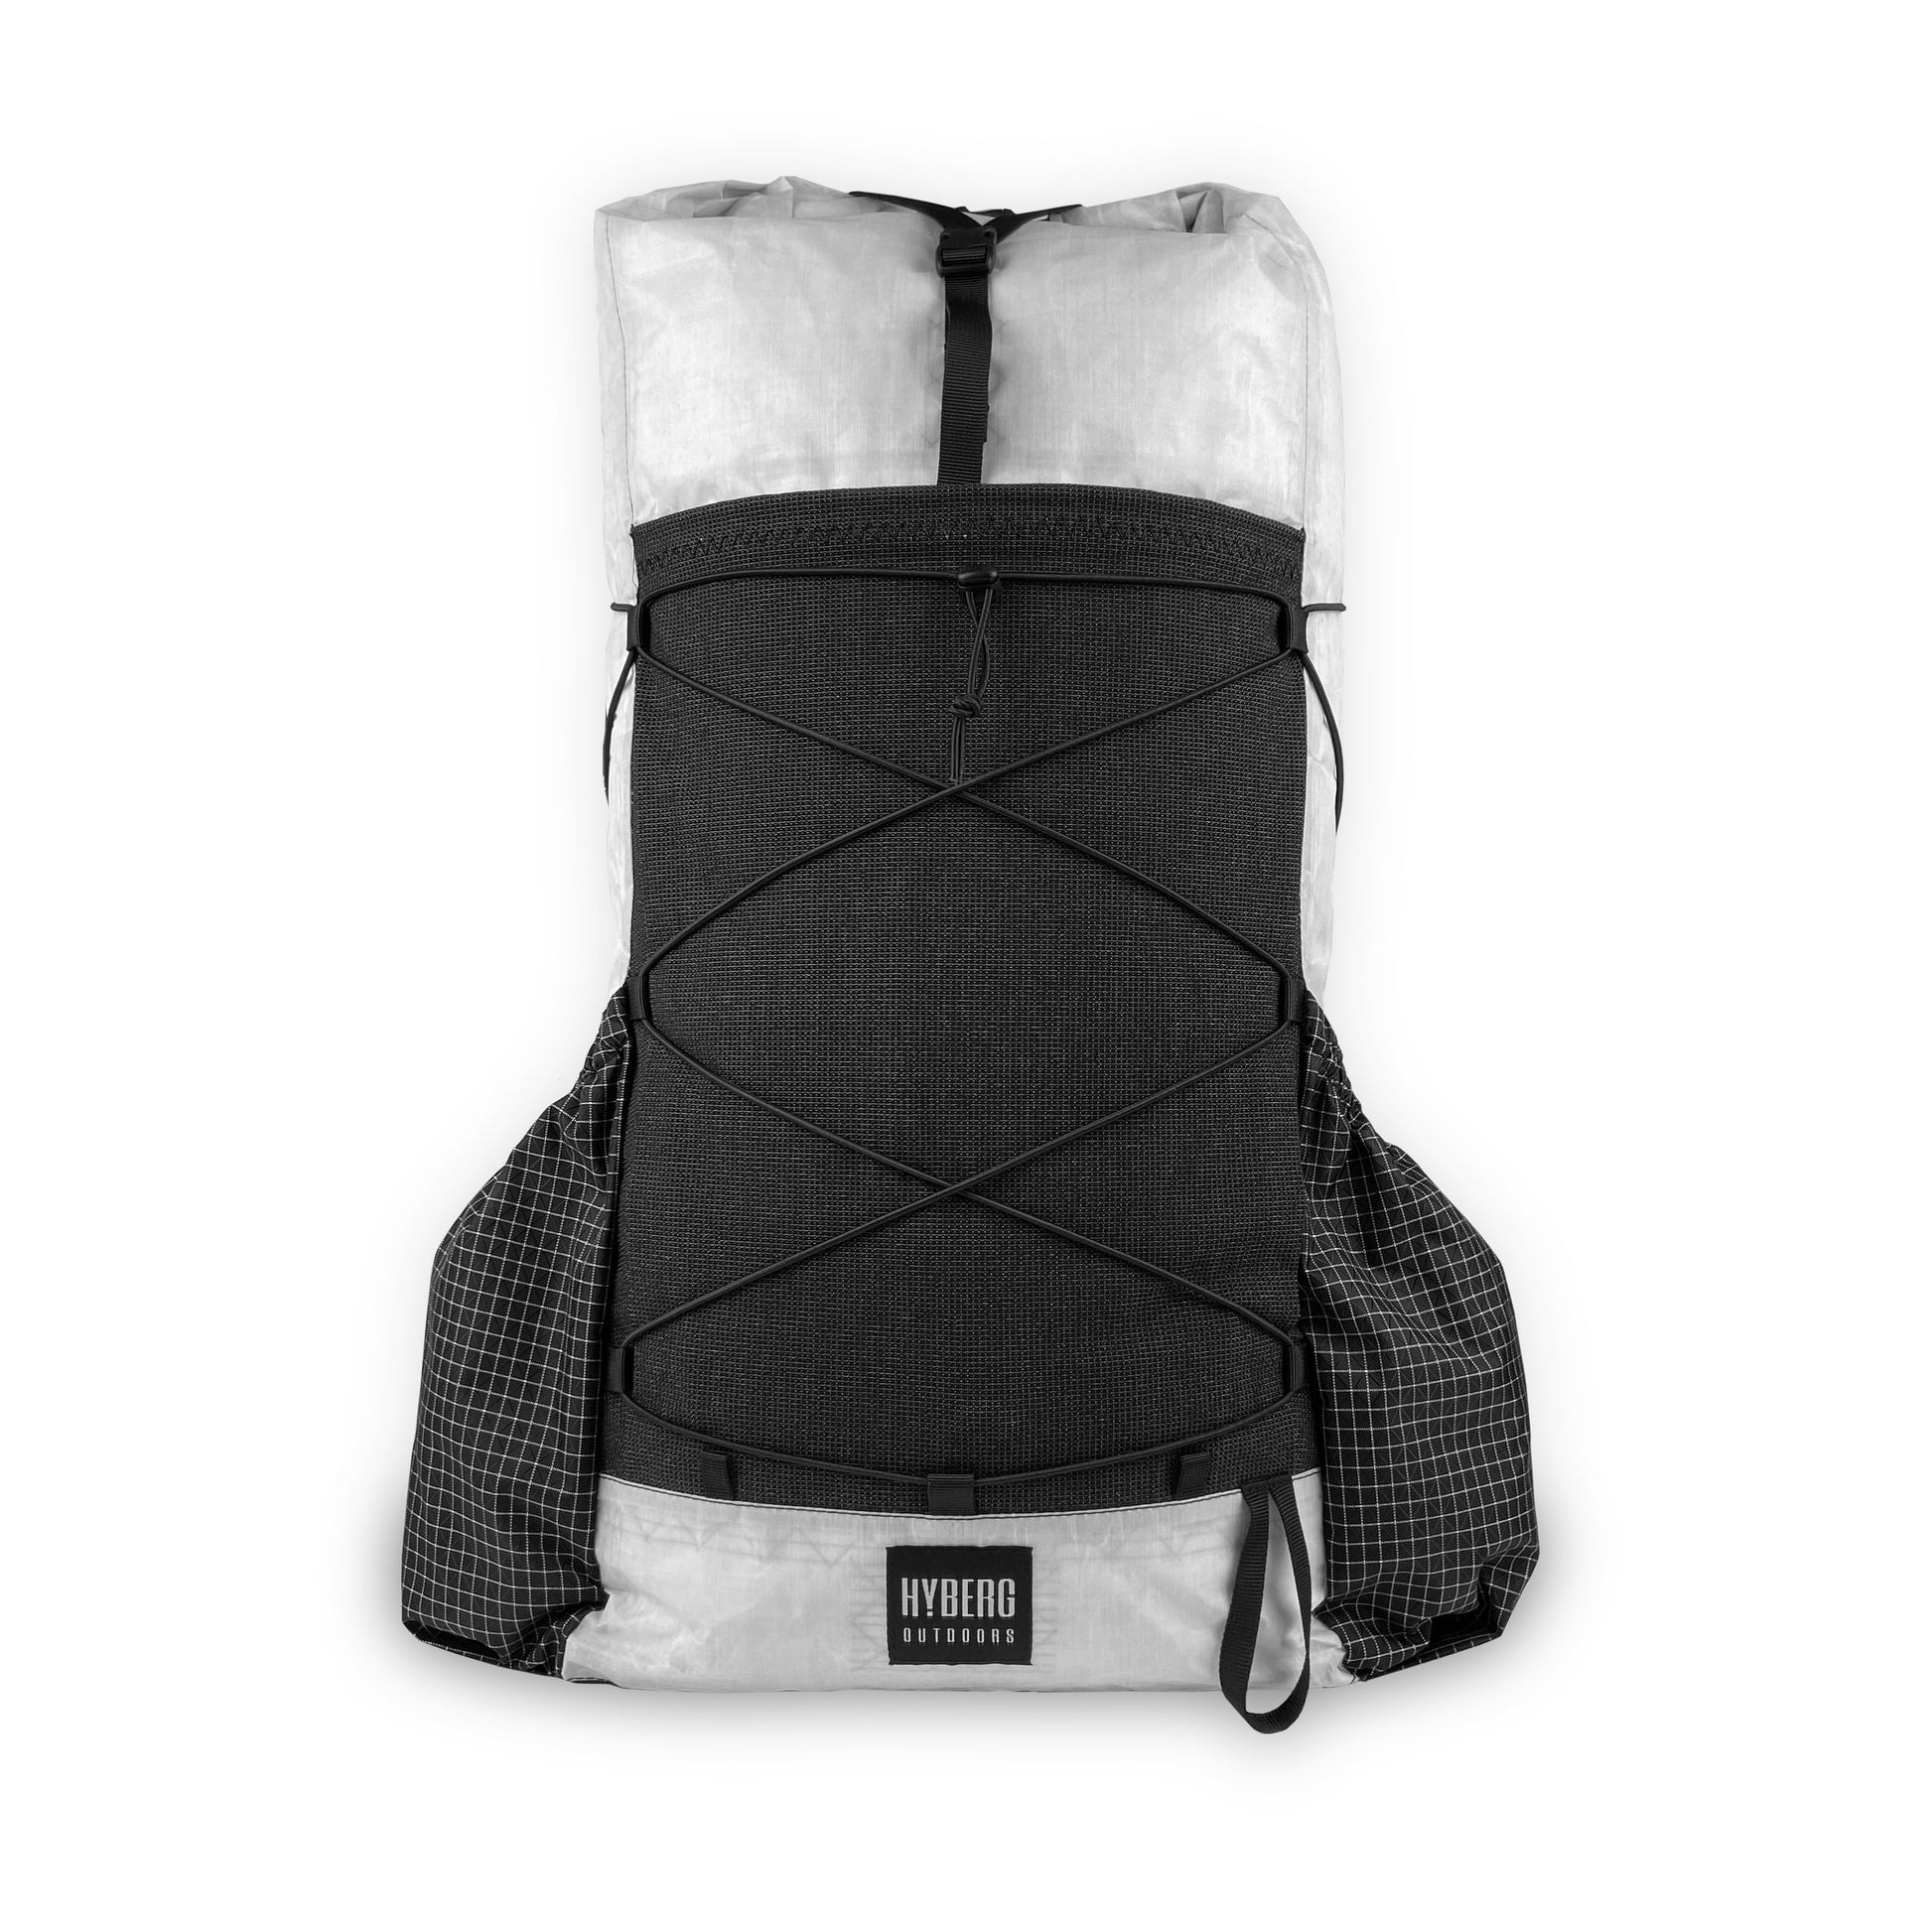 BANDIT DCF Ultralight backpack